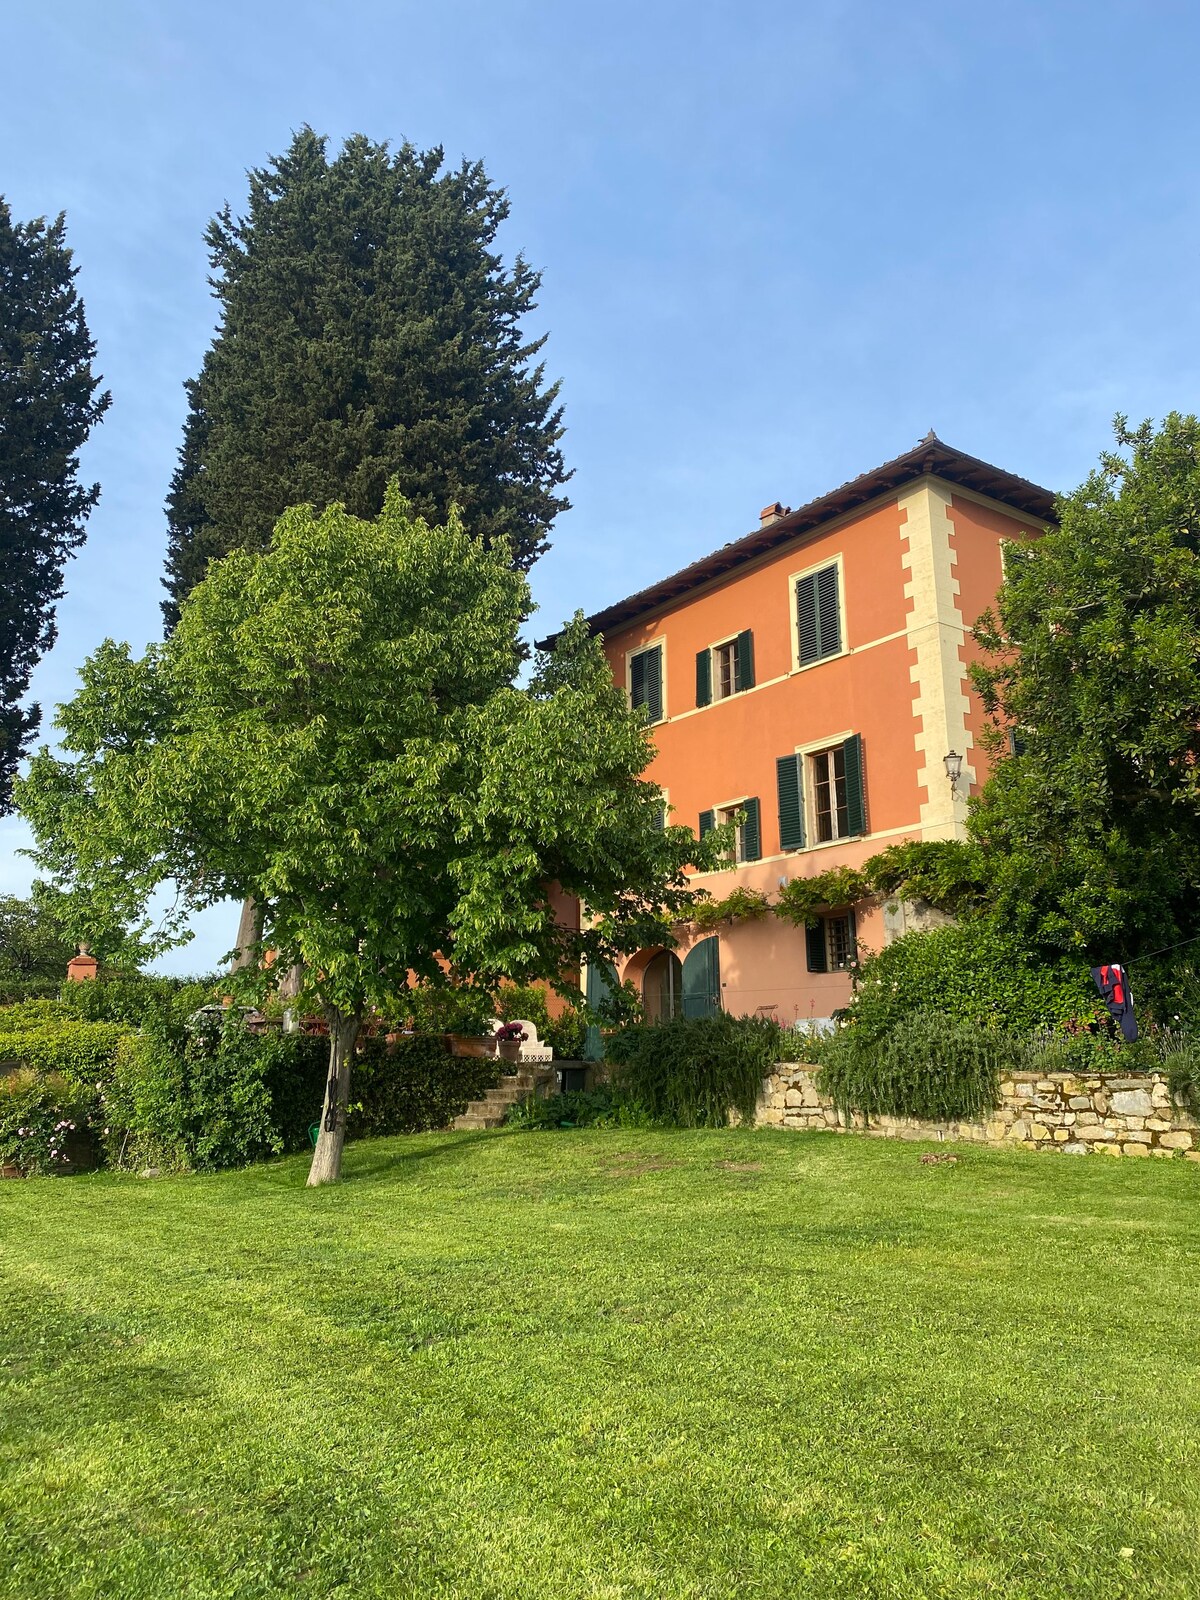 Hilltop home near Florence